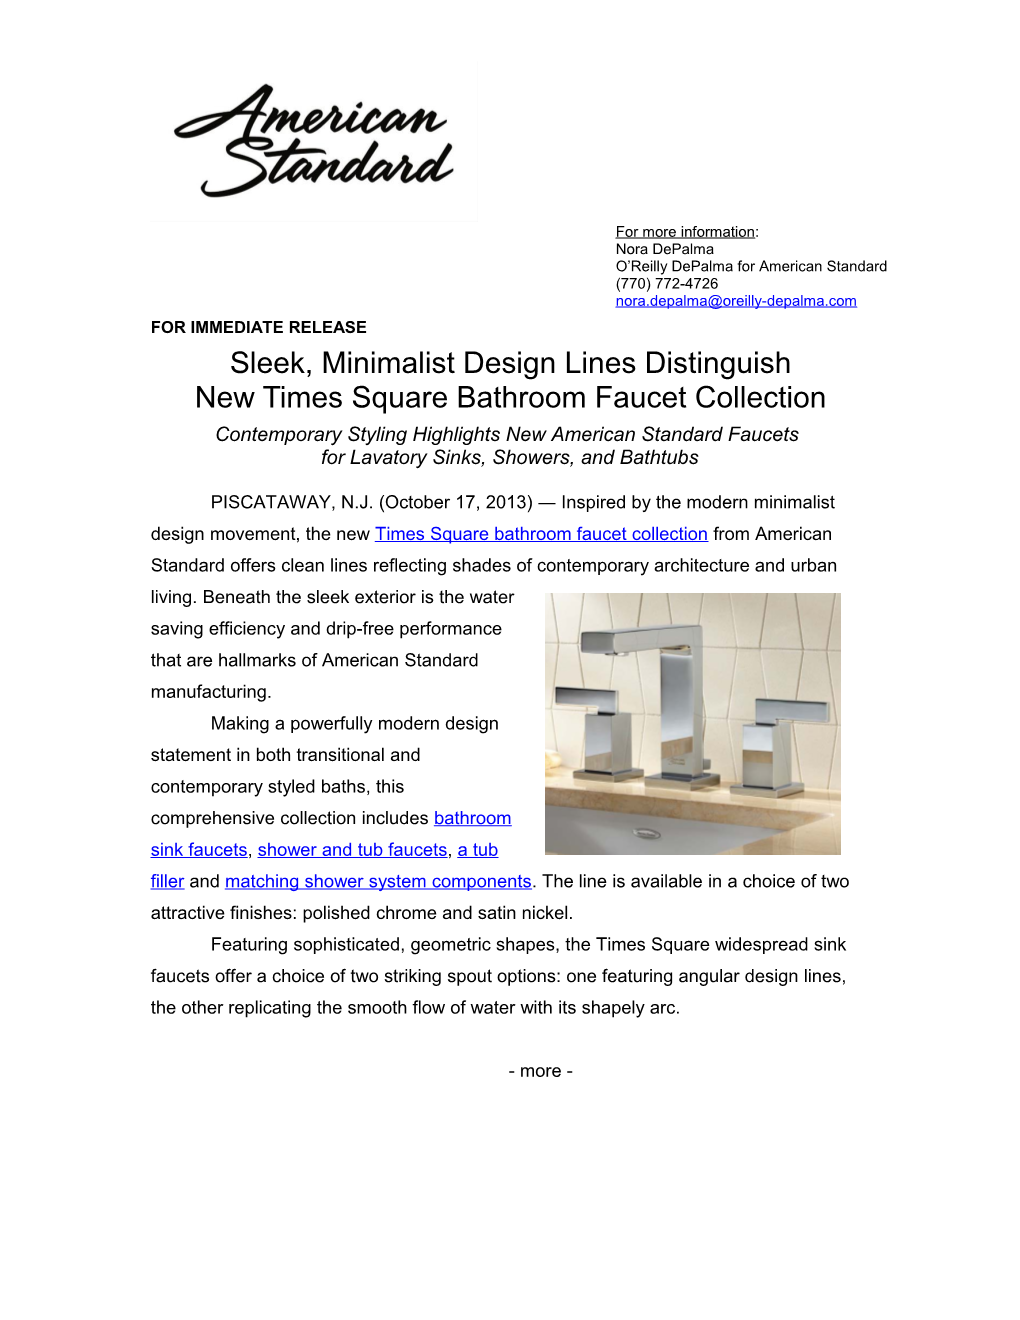 Sleek, Minimalist Design Lines Distinguish New Times Square Bathroom Faucet Collection3-3-3